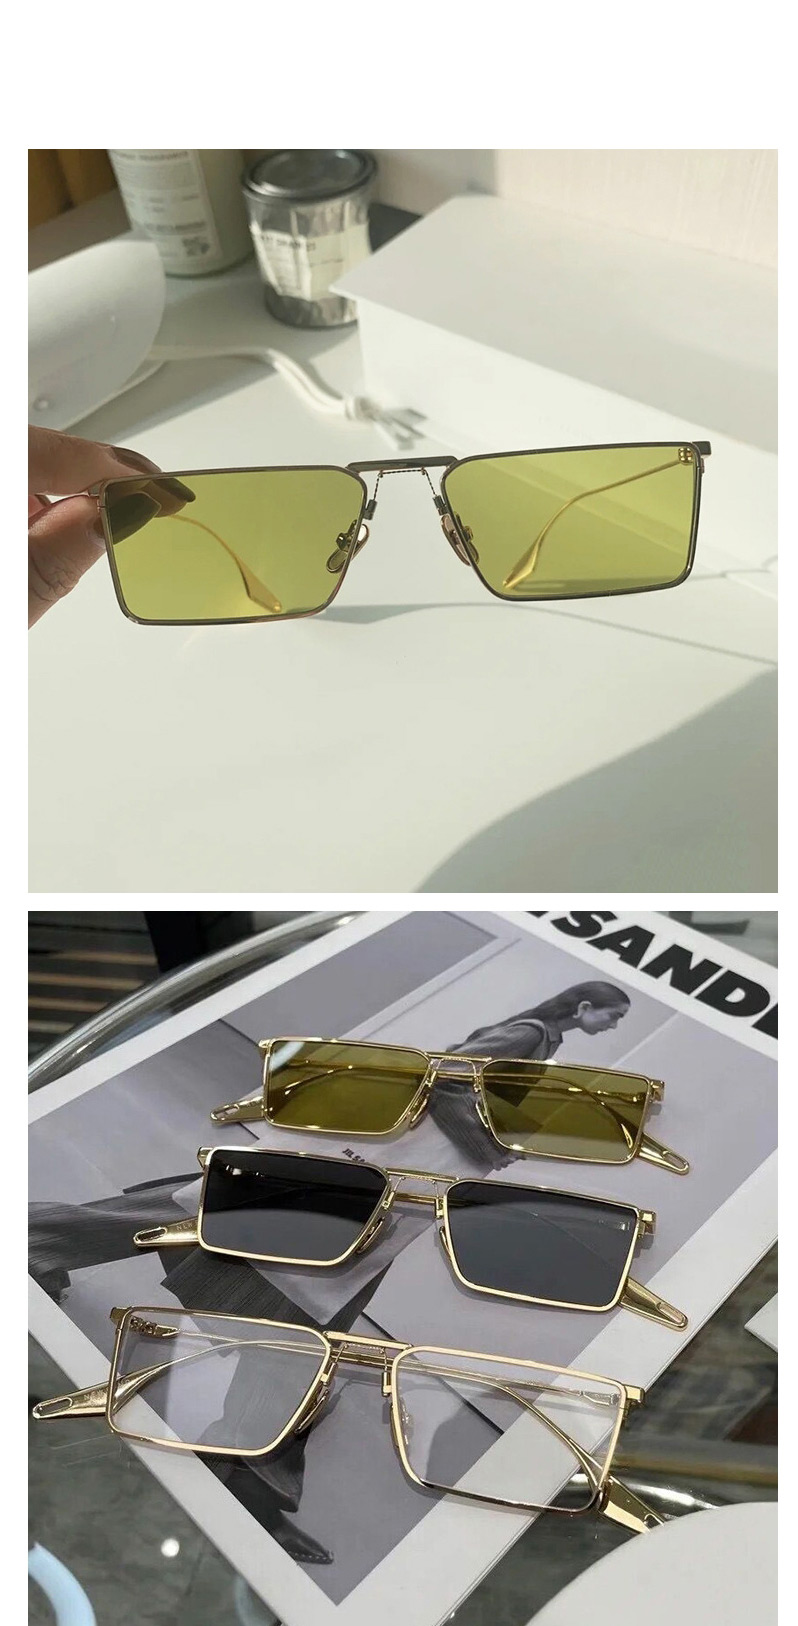 Fashion Black Frame Gray Piece Metal Small Frame Uv Protection Sunglasses,Women Sunglasses